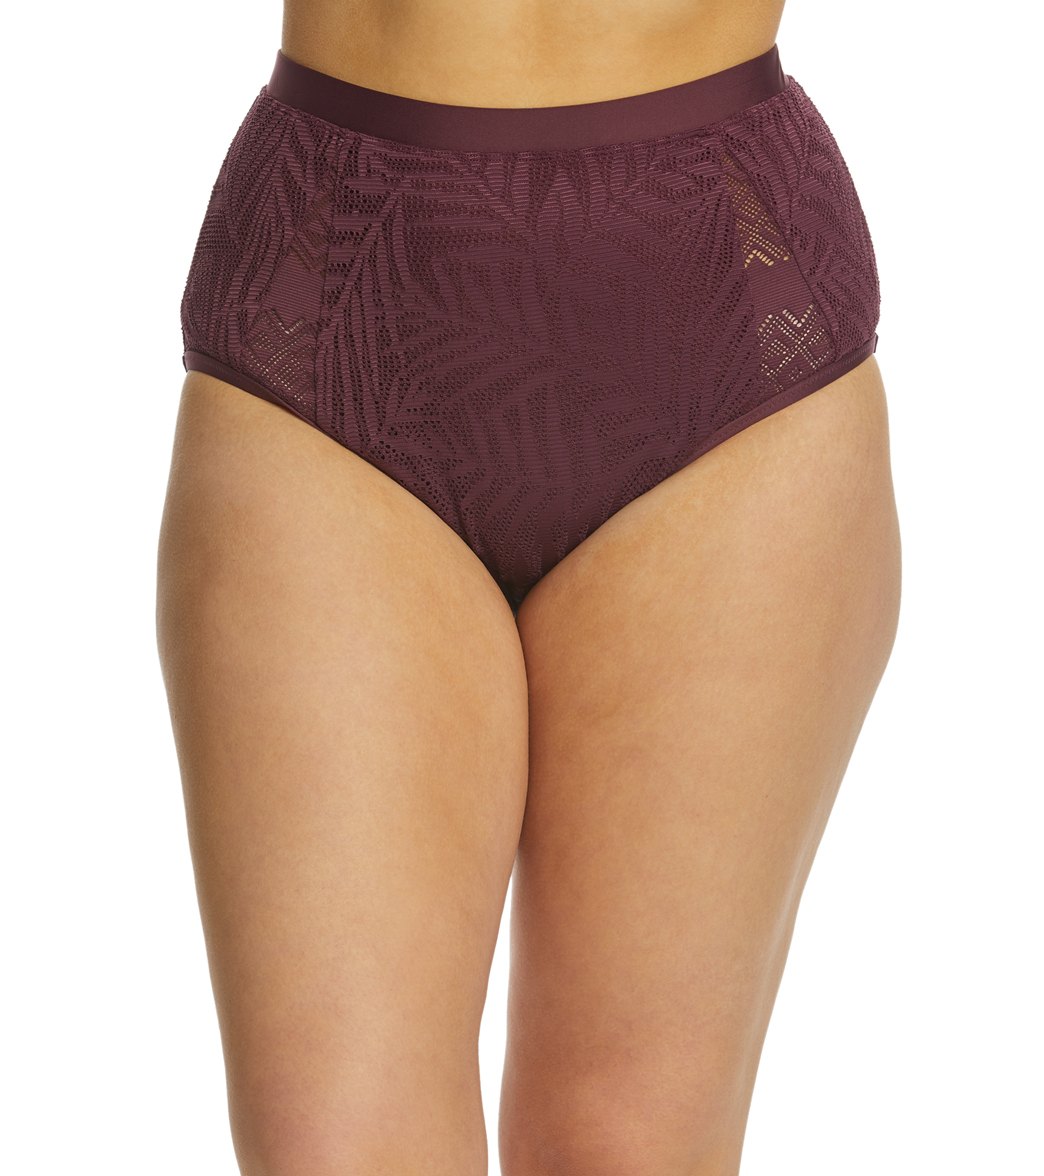 Jessica Simpson Plus Size Crochet High Waist Bikini Bottom - Wine 0X - Swimoutlet.com